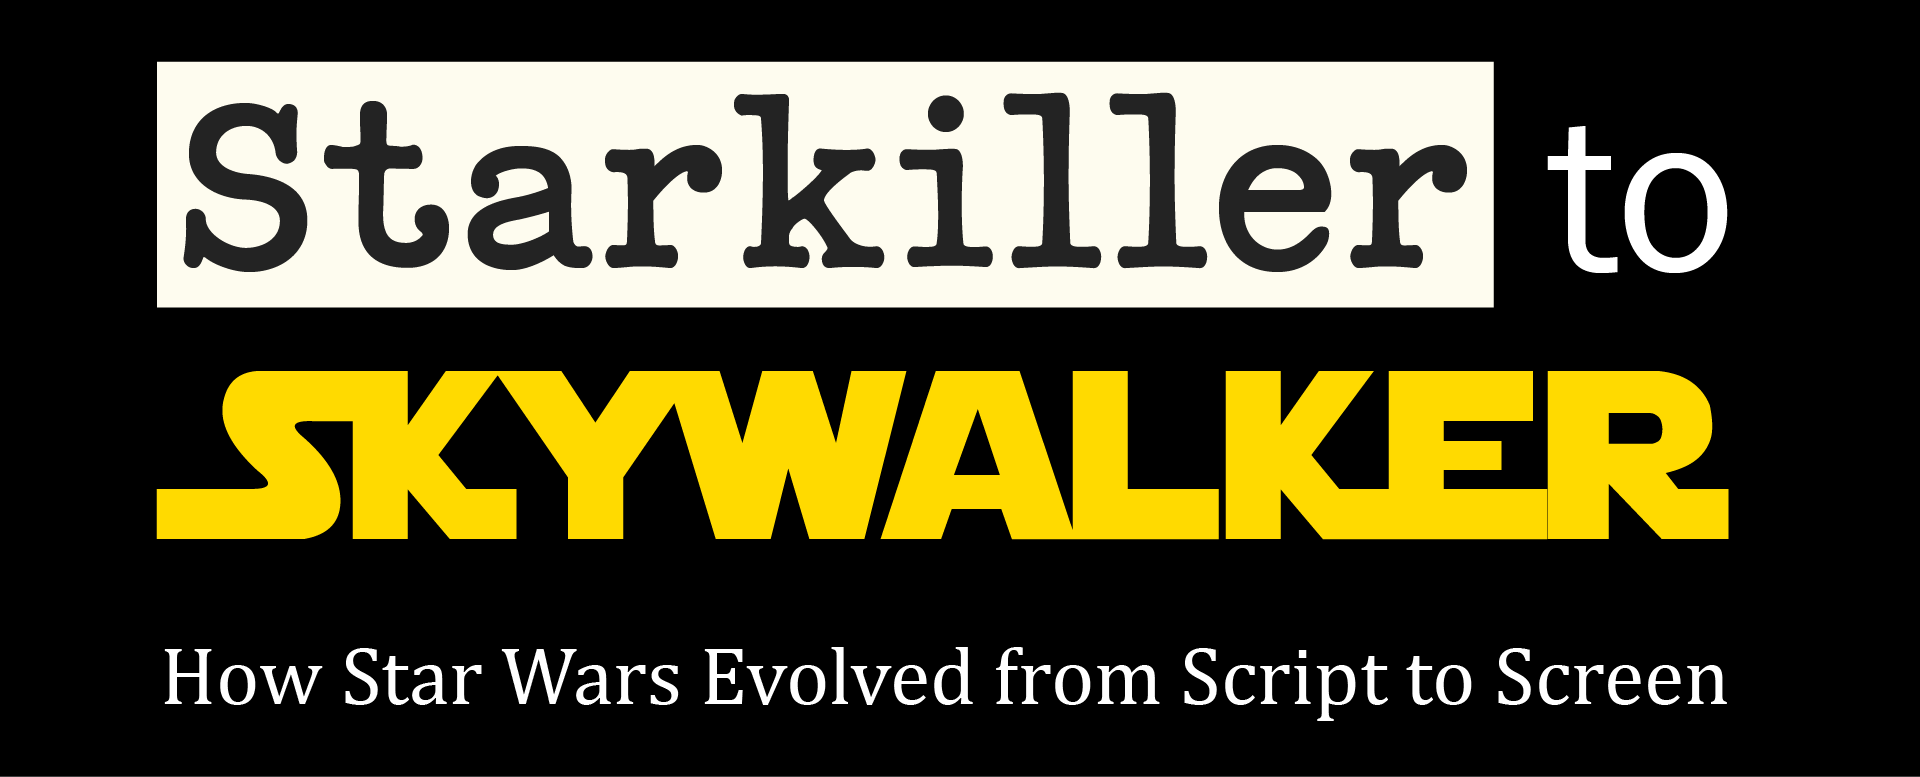 Starkiller to Skywalker: How Star Wars Evolved from Script to Screen